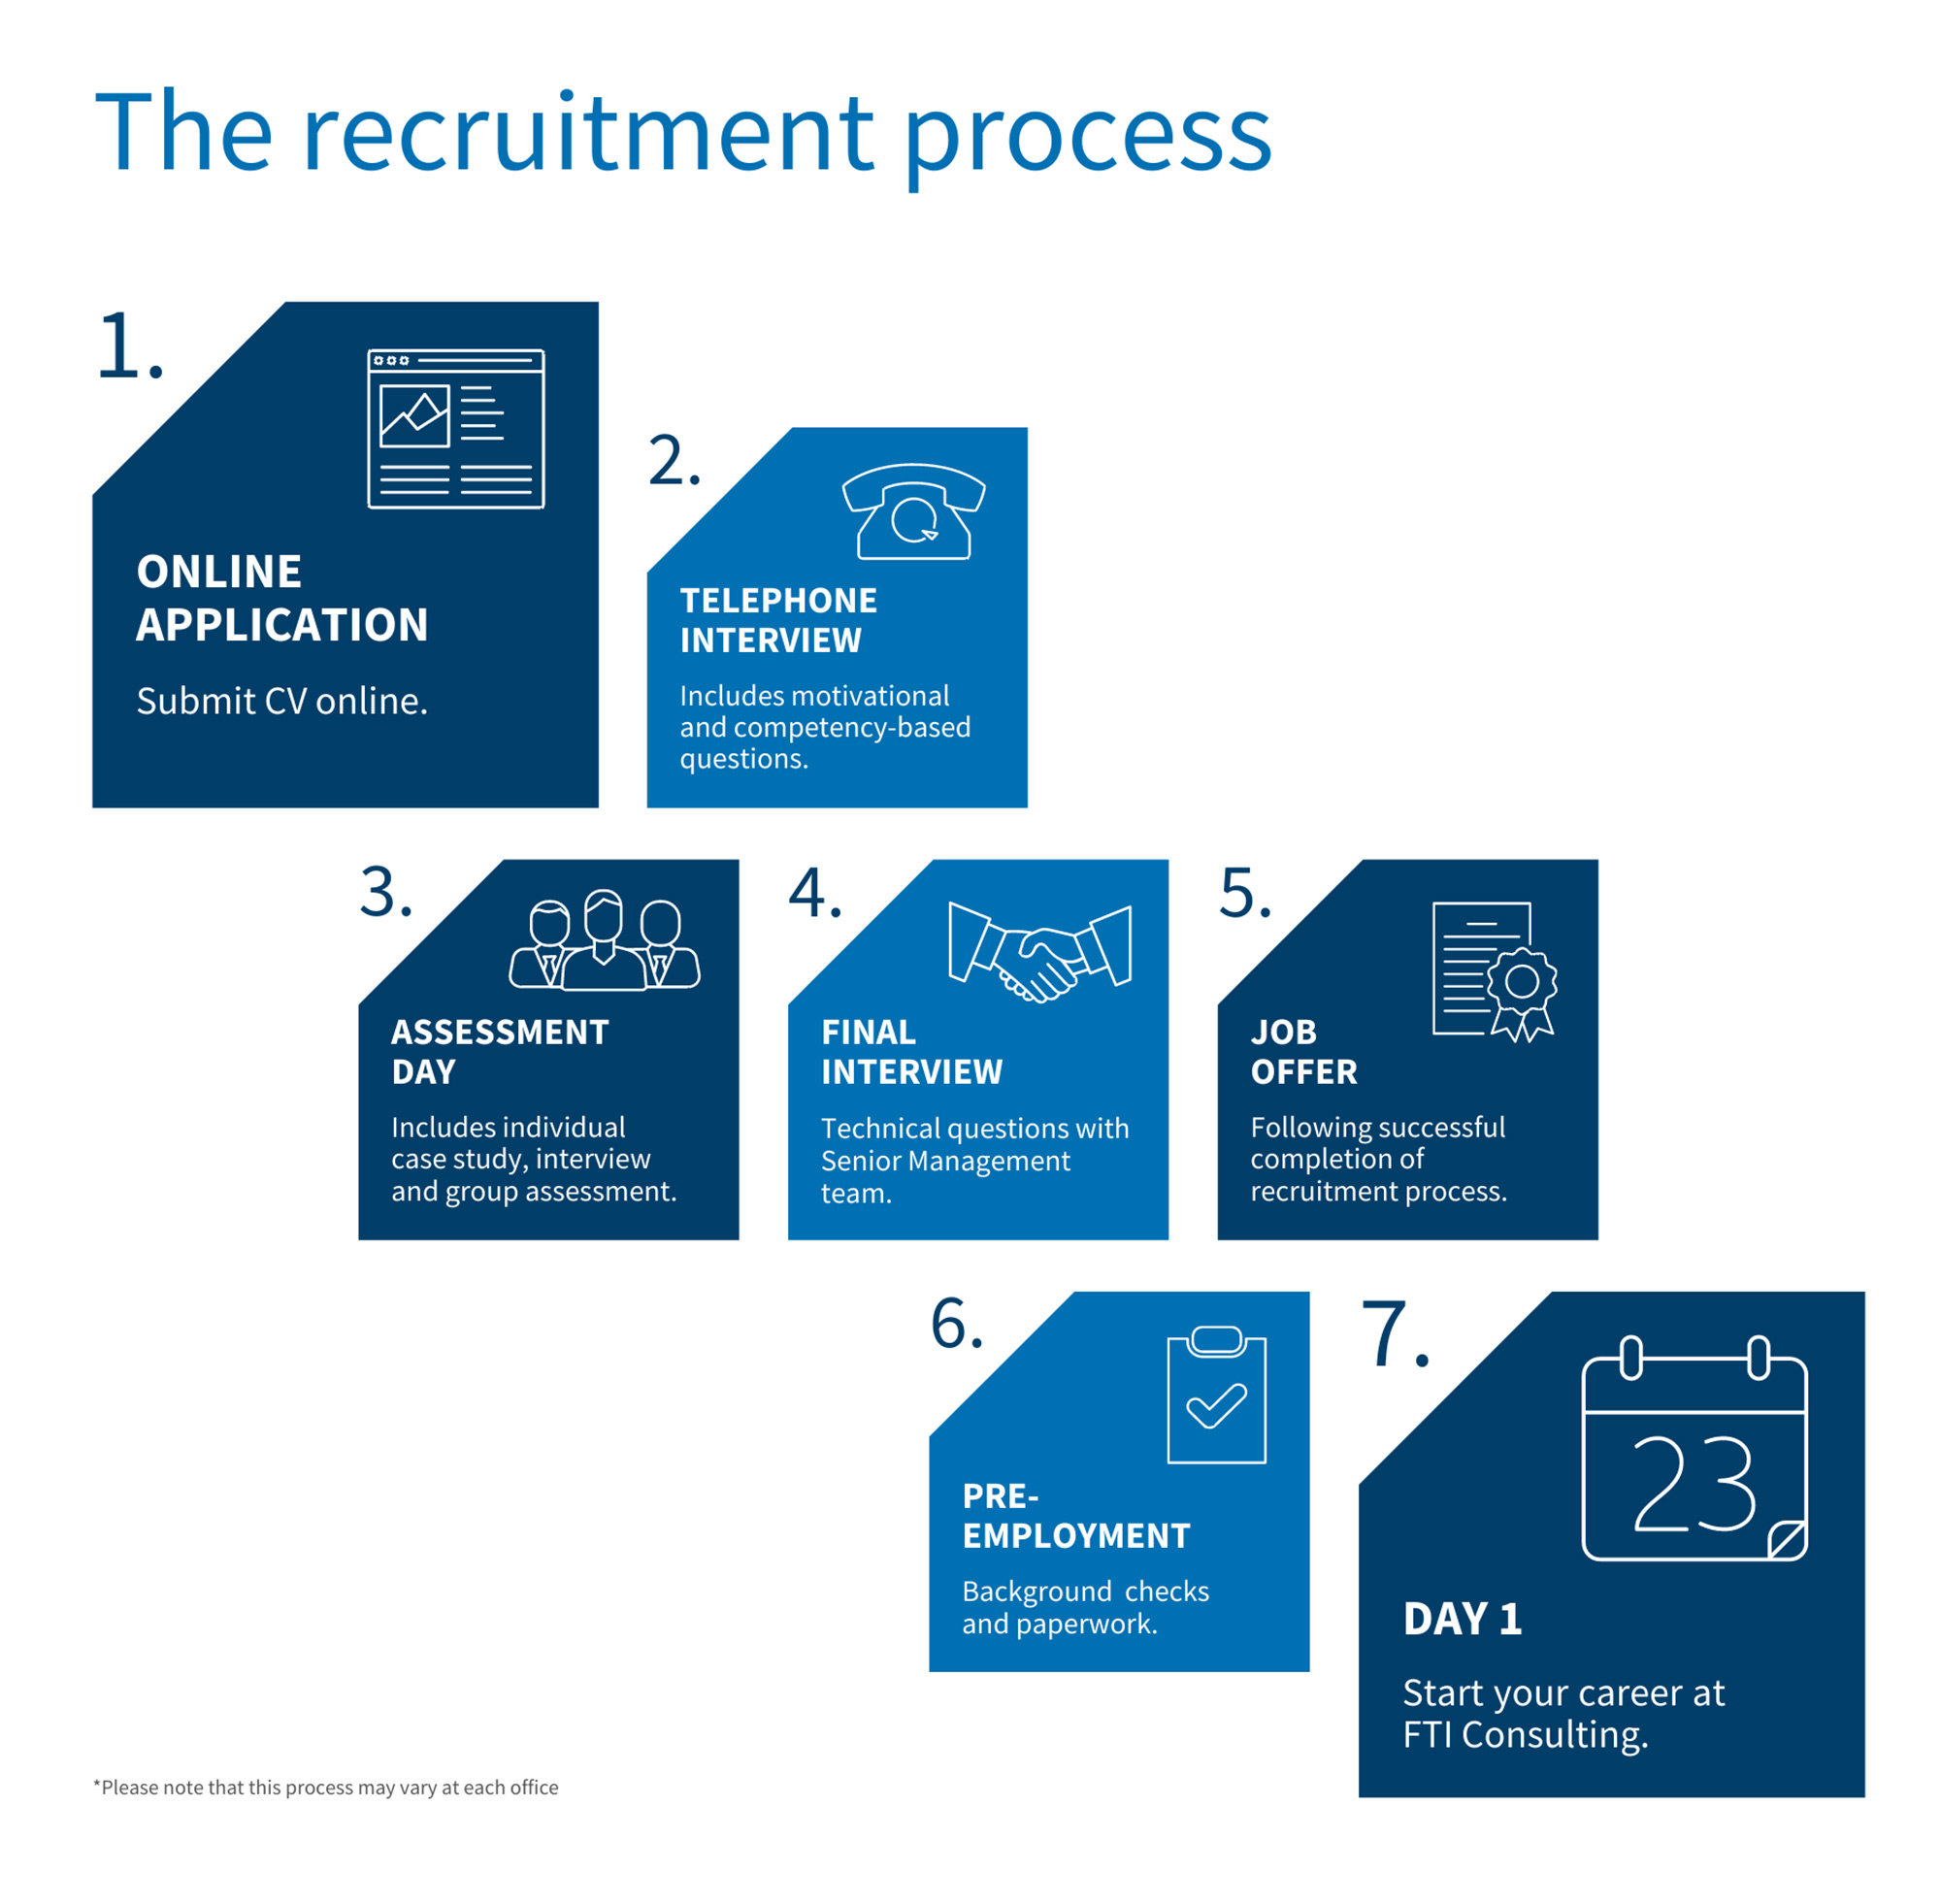 The recruitment process